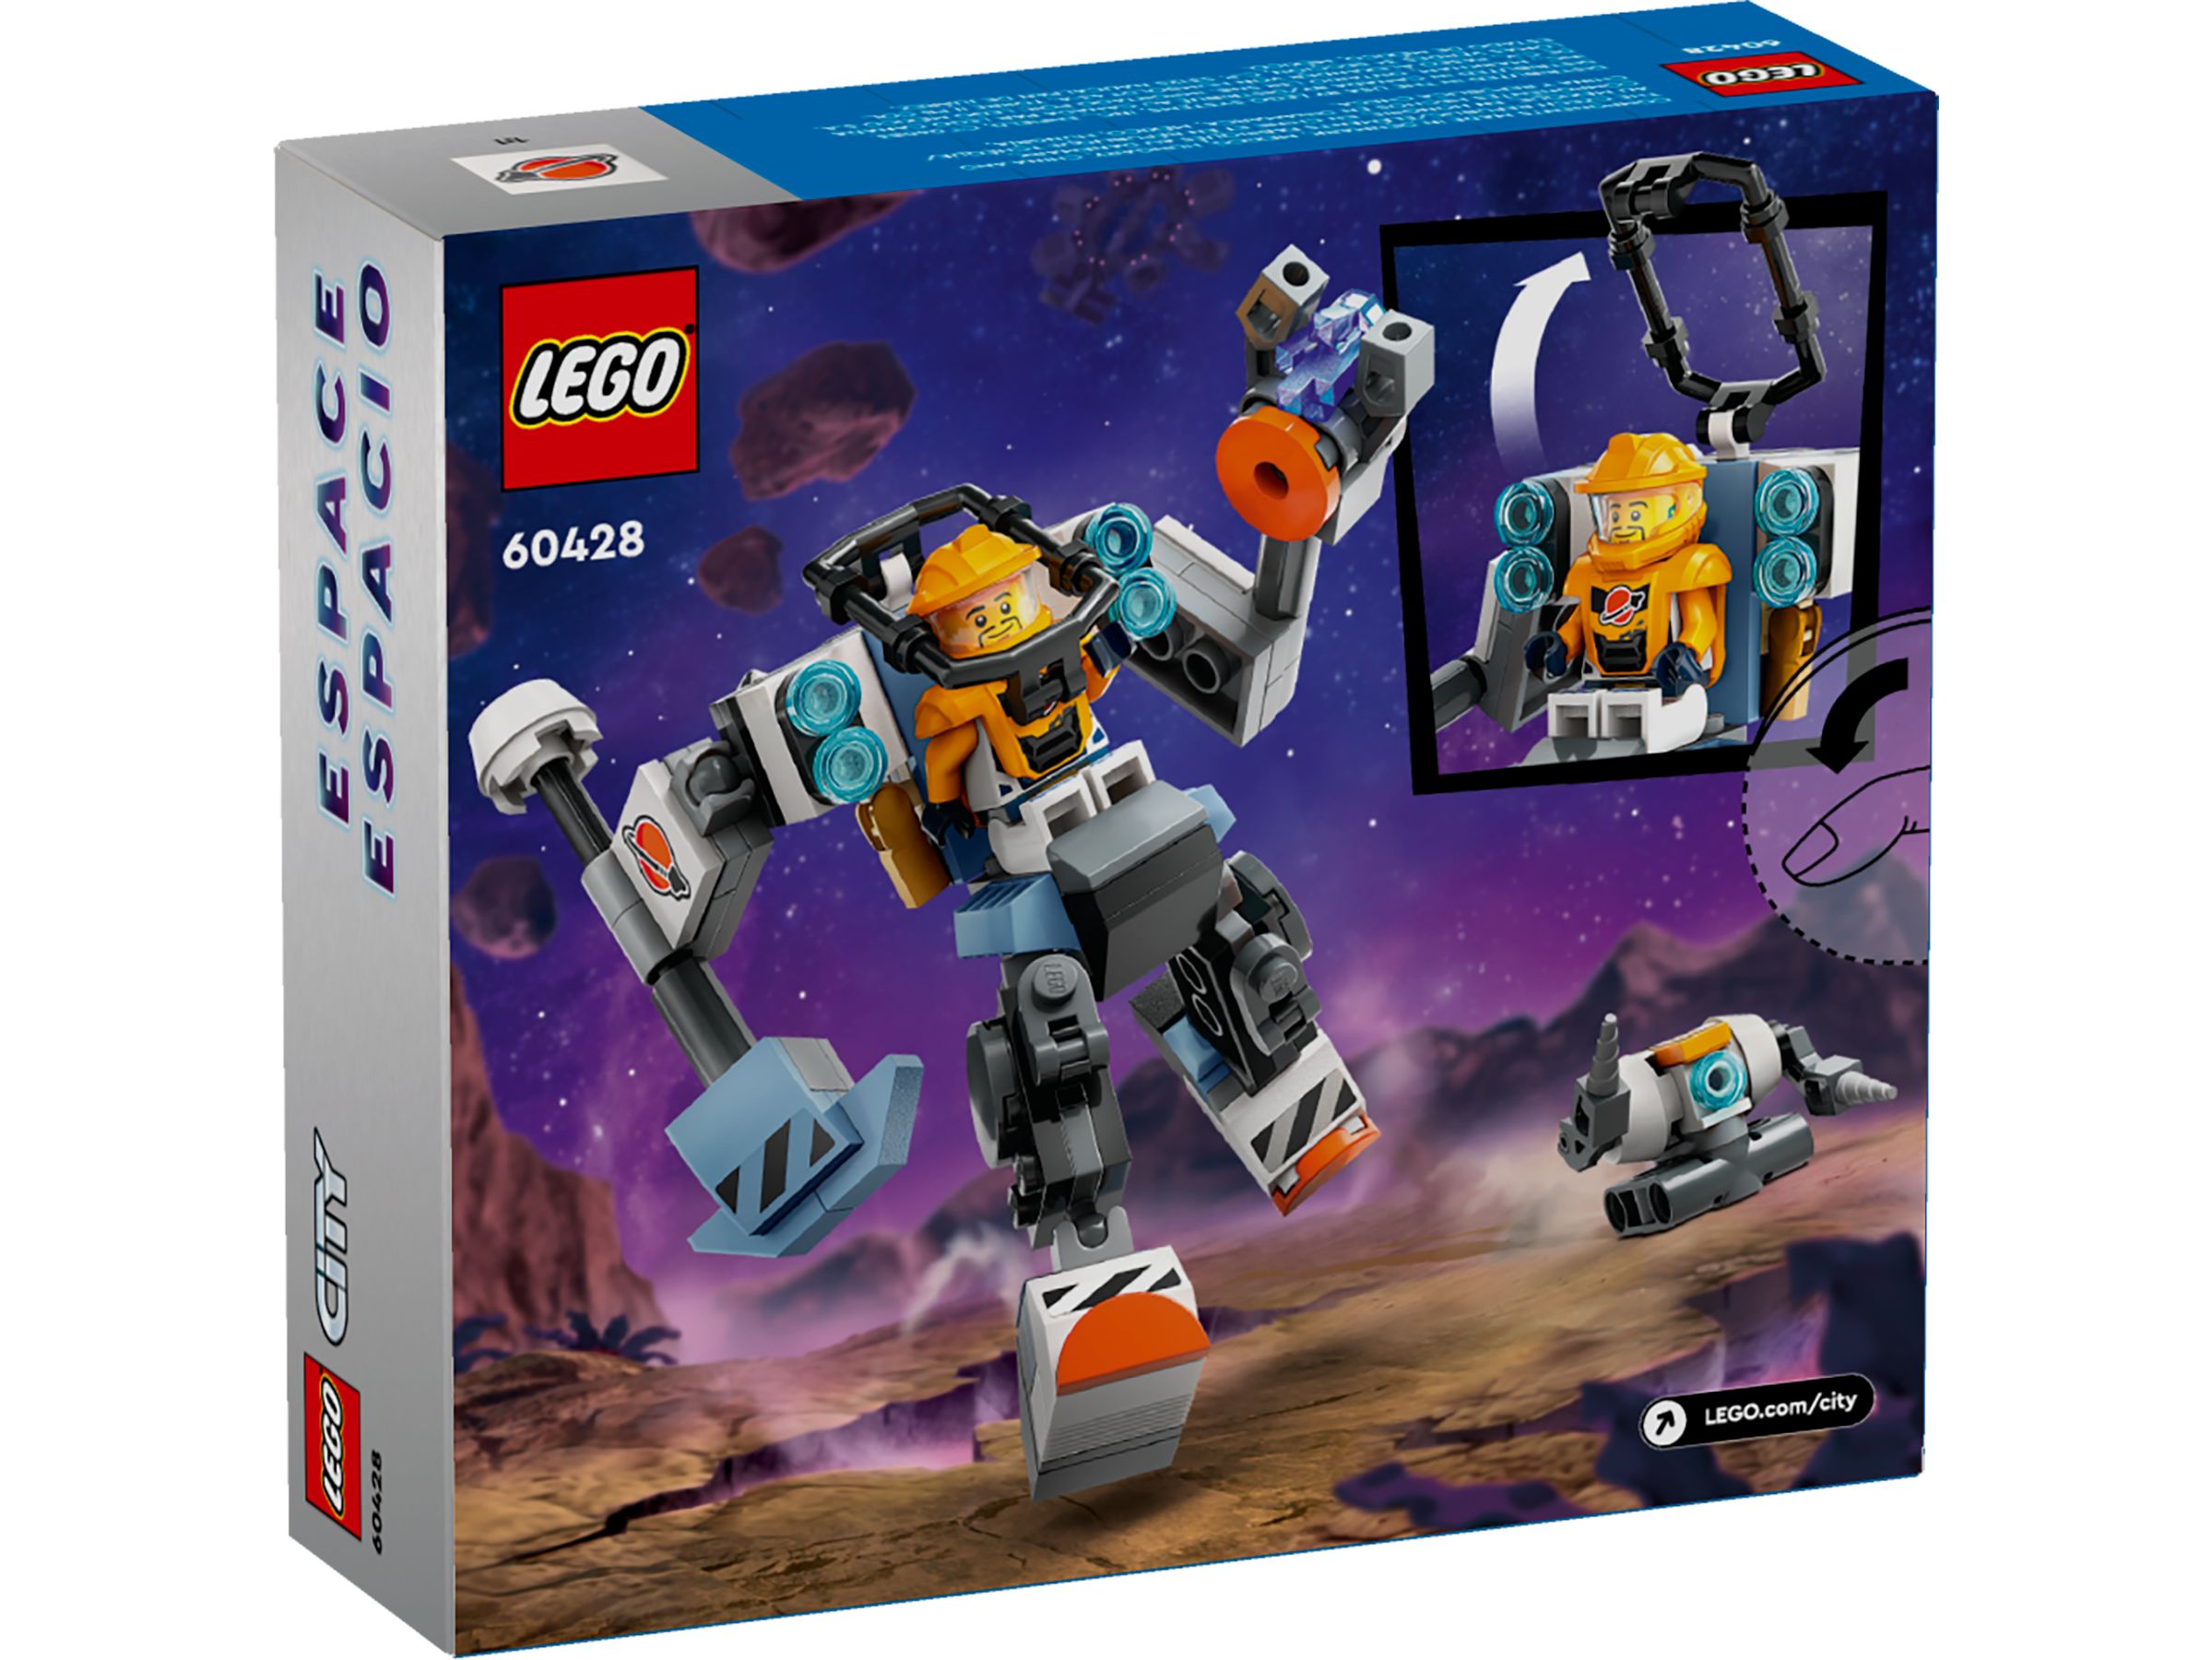 LEGO City 60428 Weltraum-Mech LEGO_60428_alt3.jpg